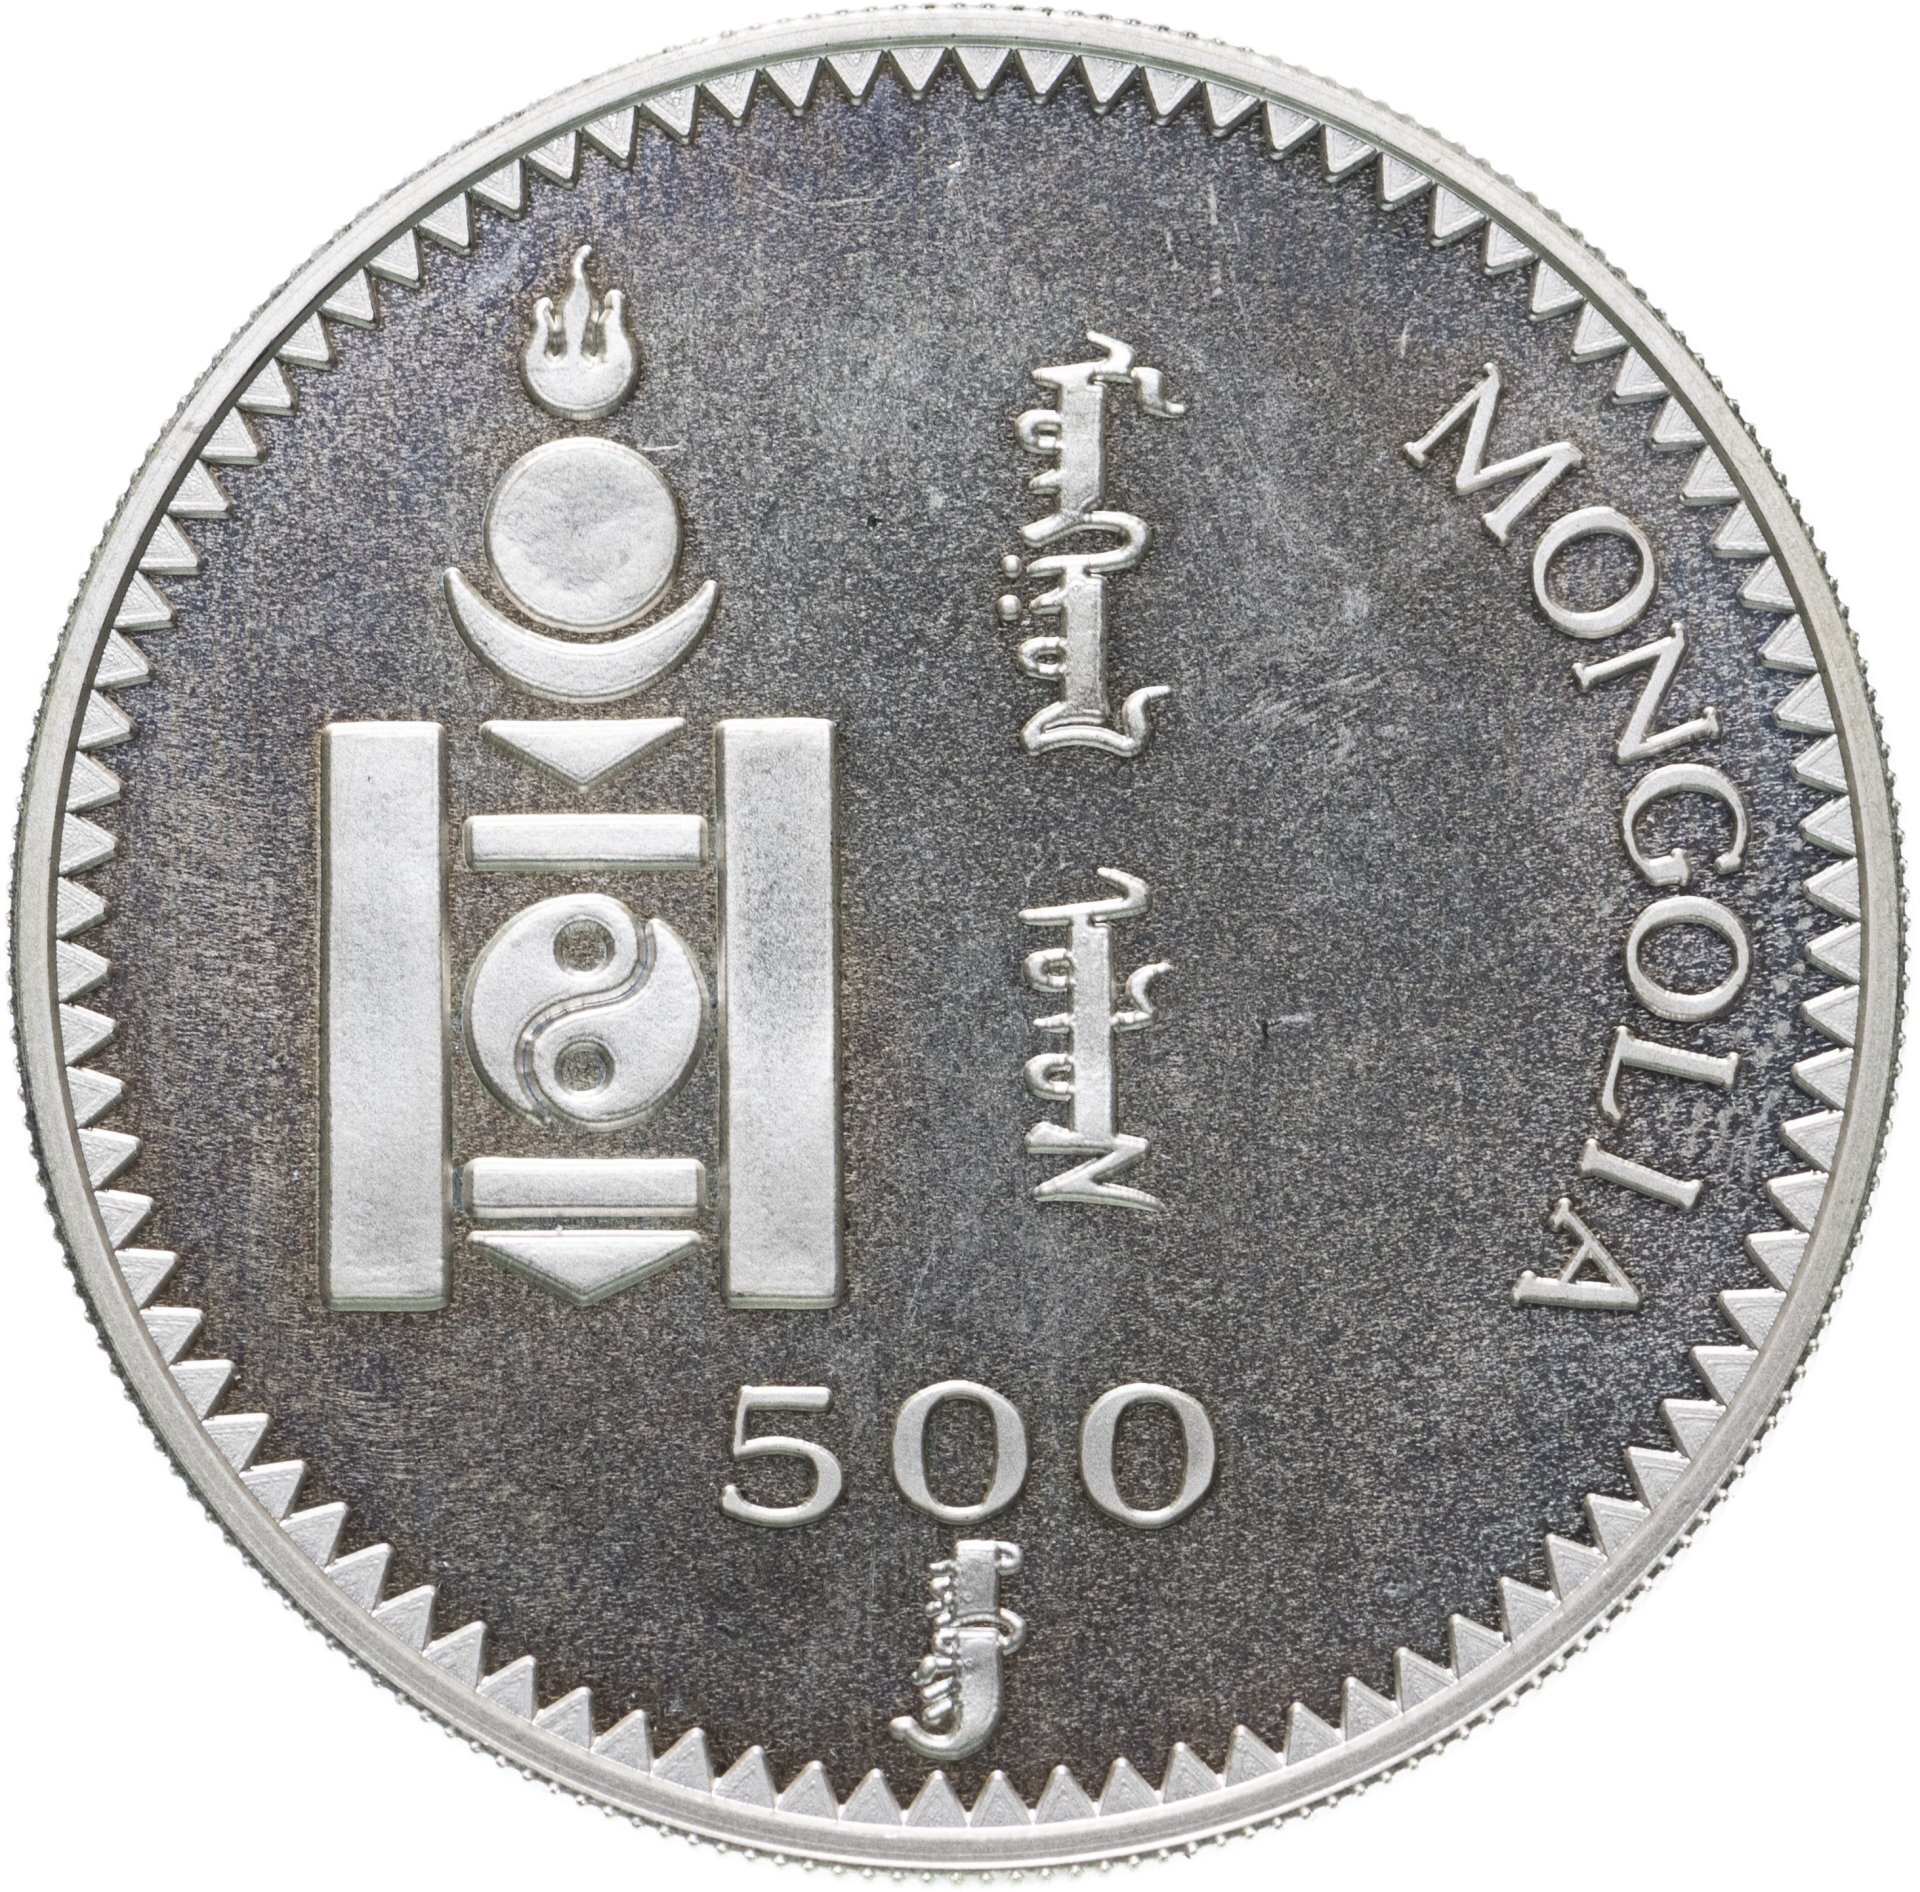 Монголия тугрик к рублю на сегодня. 500 Тугриков Монголия. Валюта Монголии монеты. Монгольские монеты 500 тугриков. Монгольский тугрик монета.